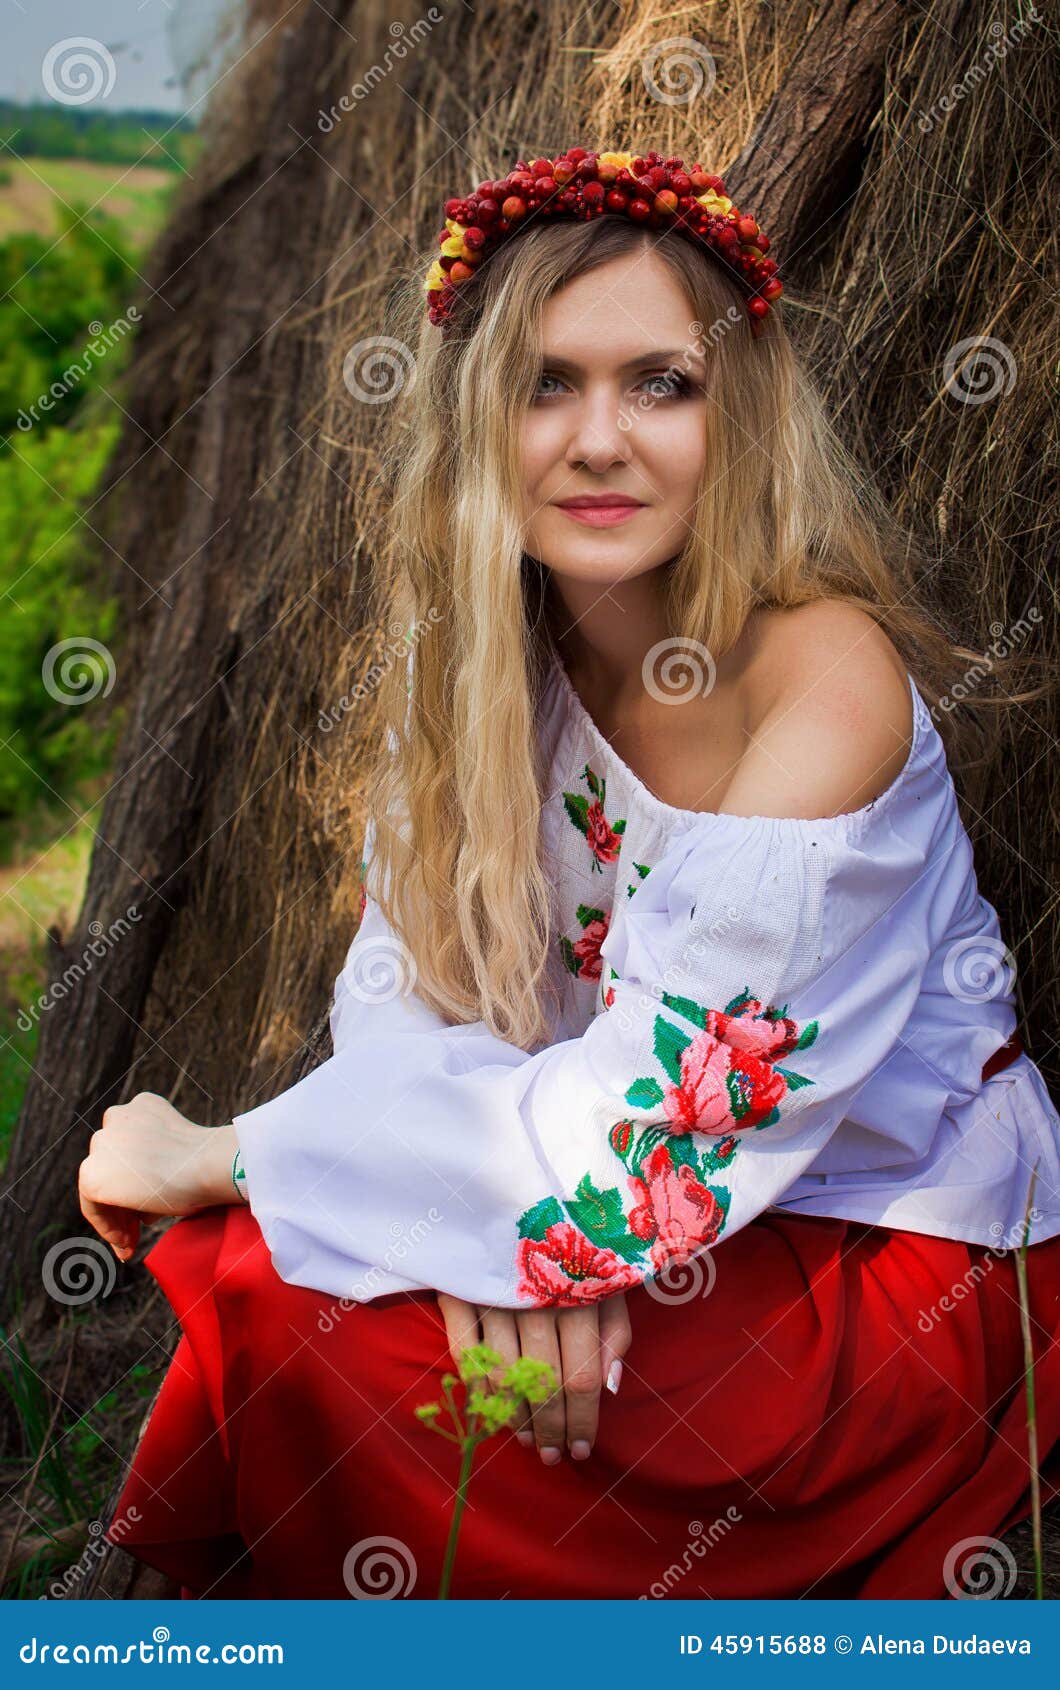 Ukrainian Beautiful Woman in the Hayloft Stock Photo - Image of blond ...